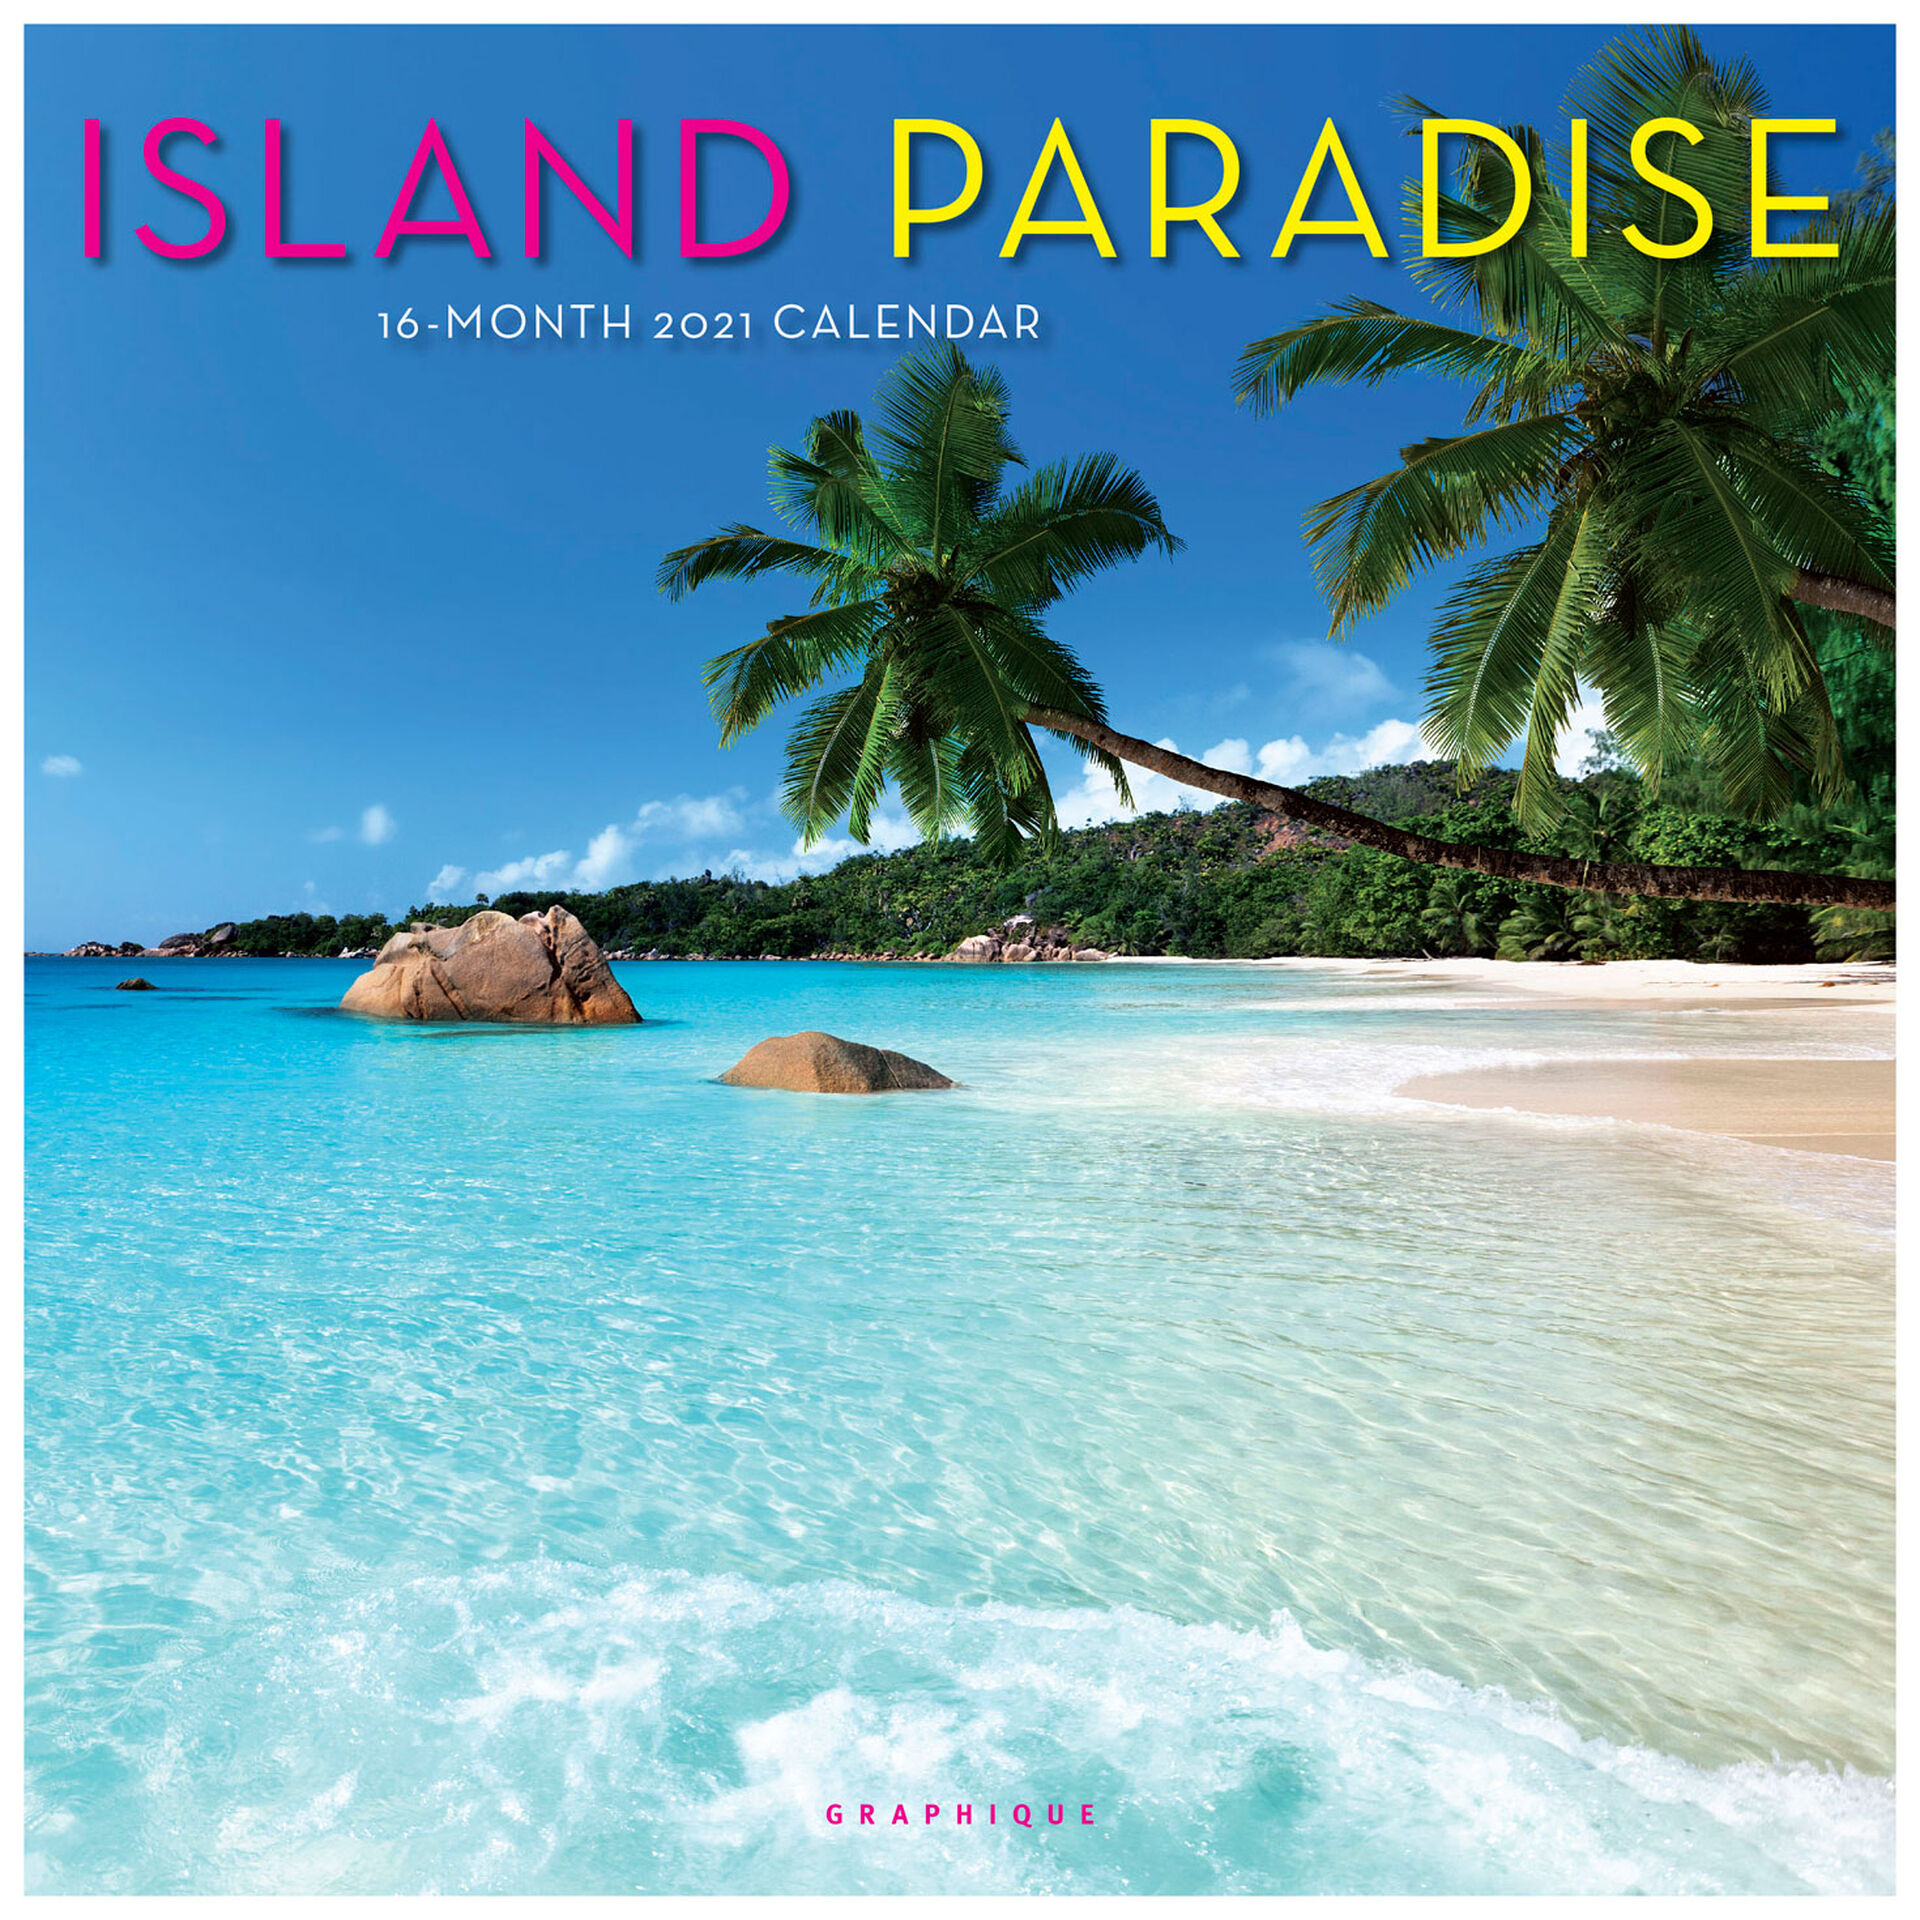 Island Paradise 2021 Wall Calendar, 16Month Calendars & Planners